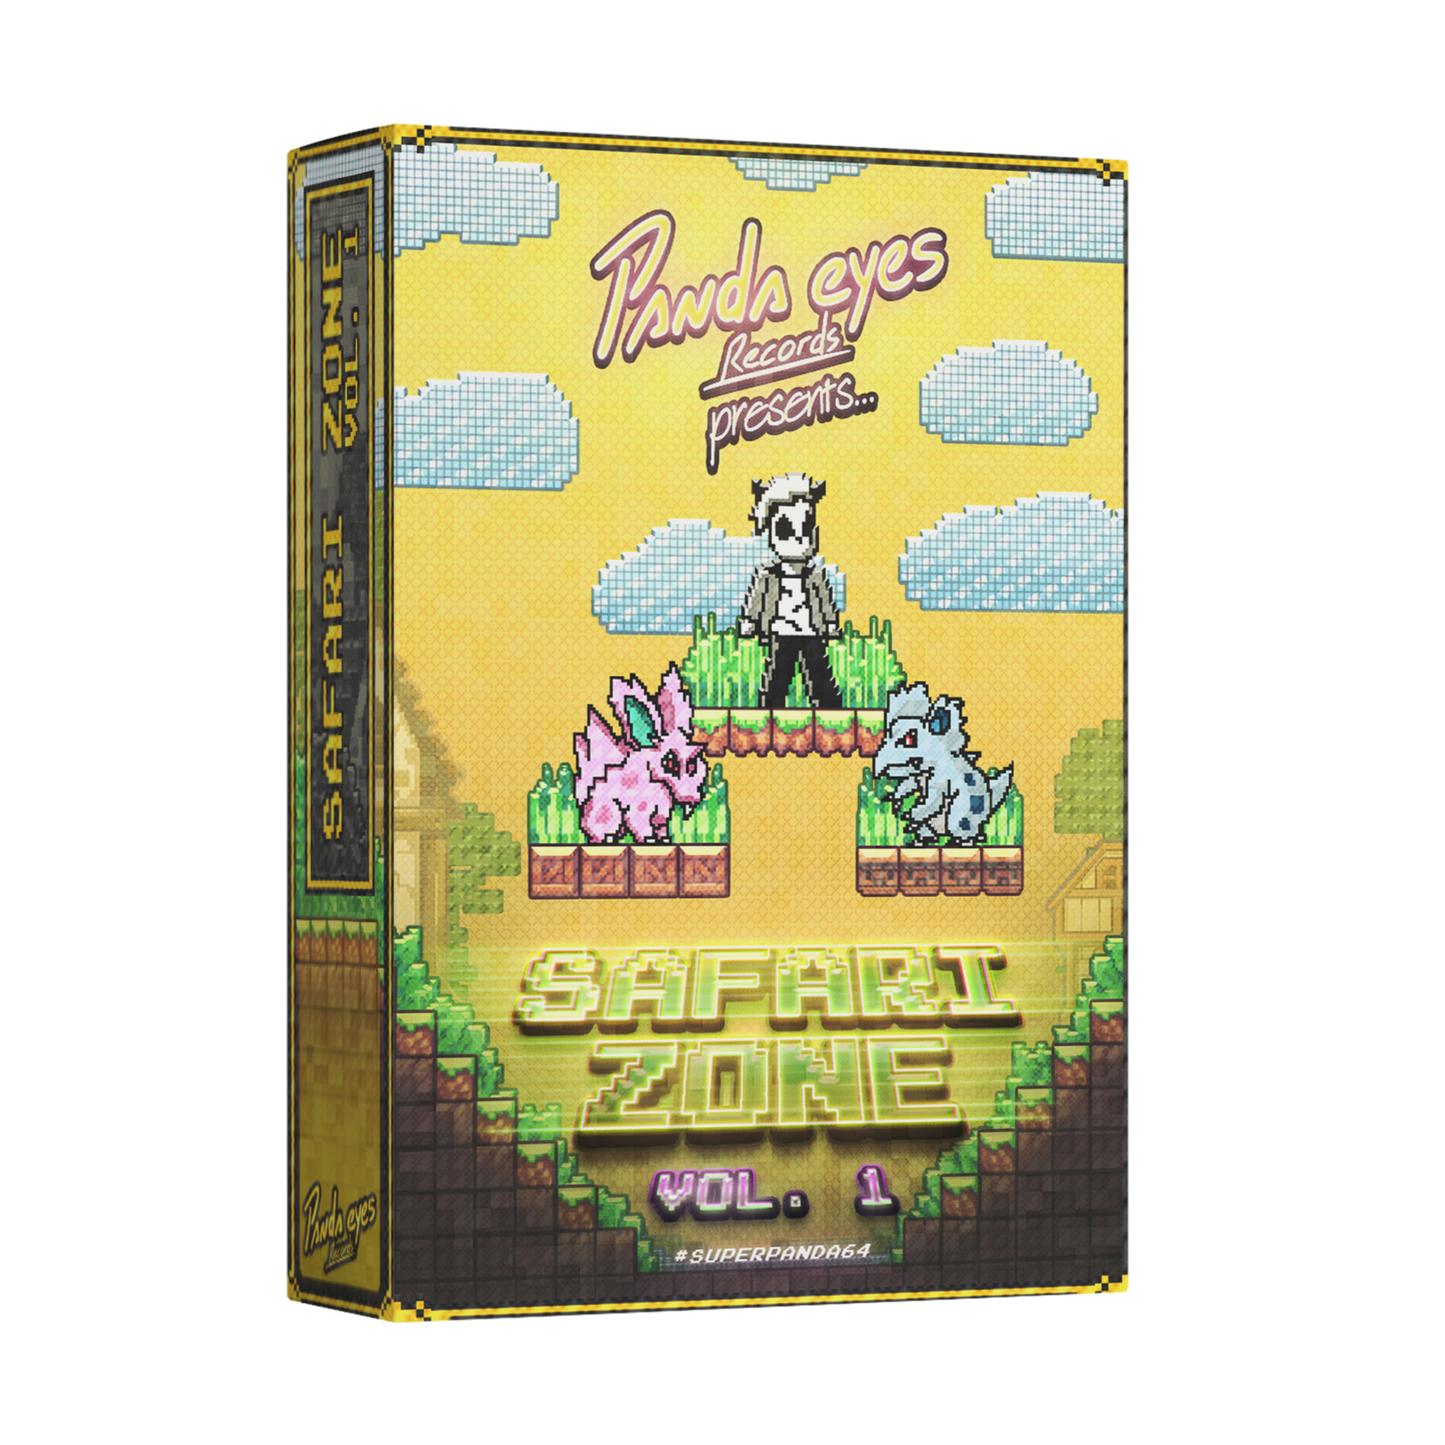 Panda Eyes Records Presents; Safari Zone Sample Pack Vol. 1